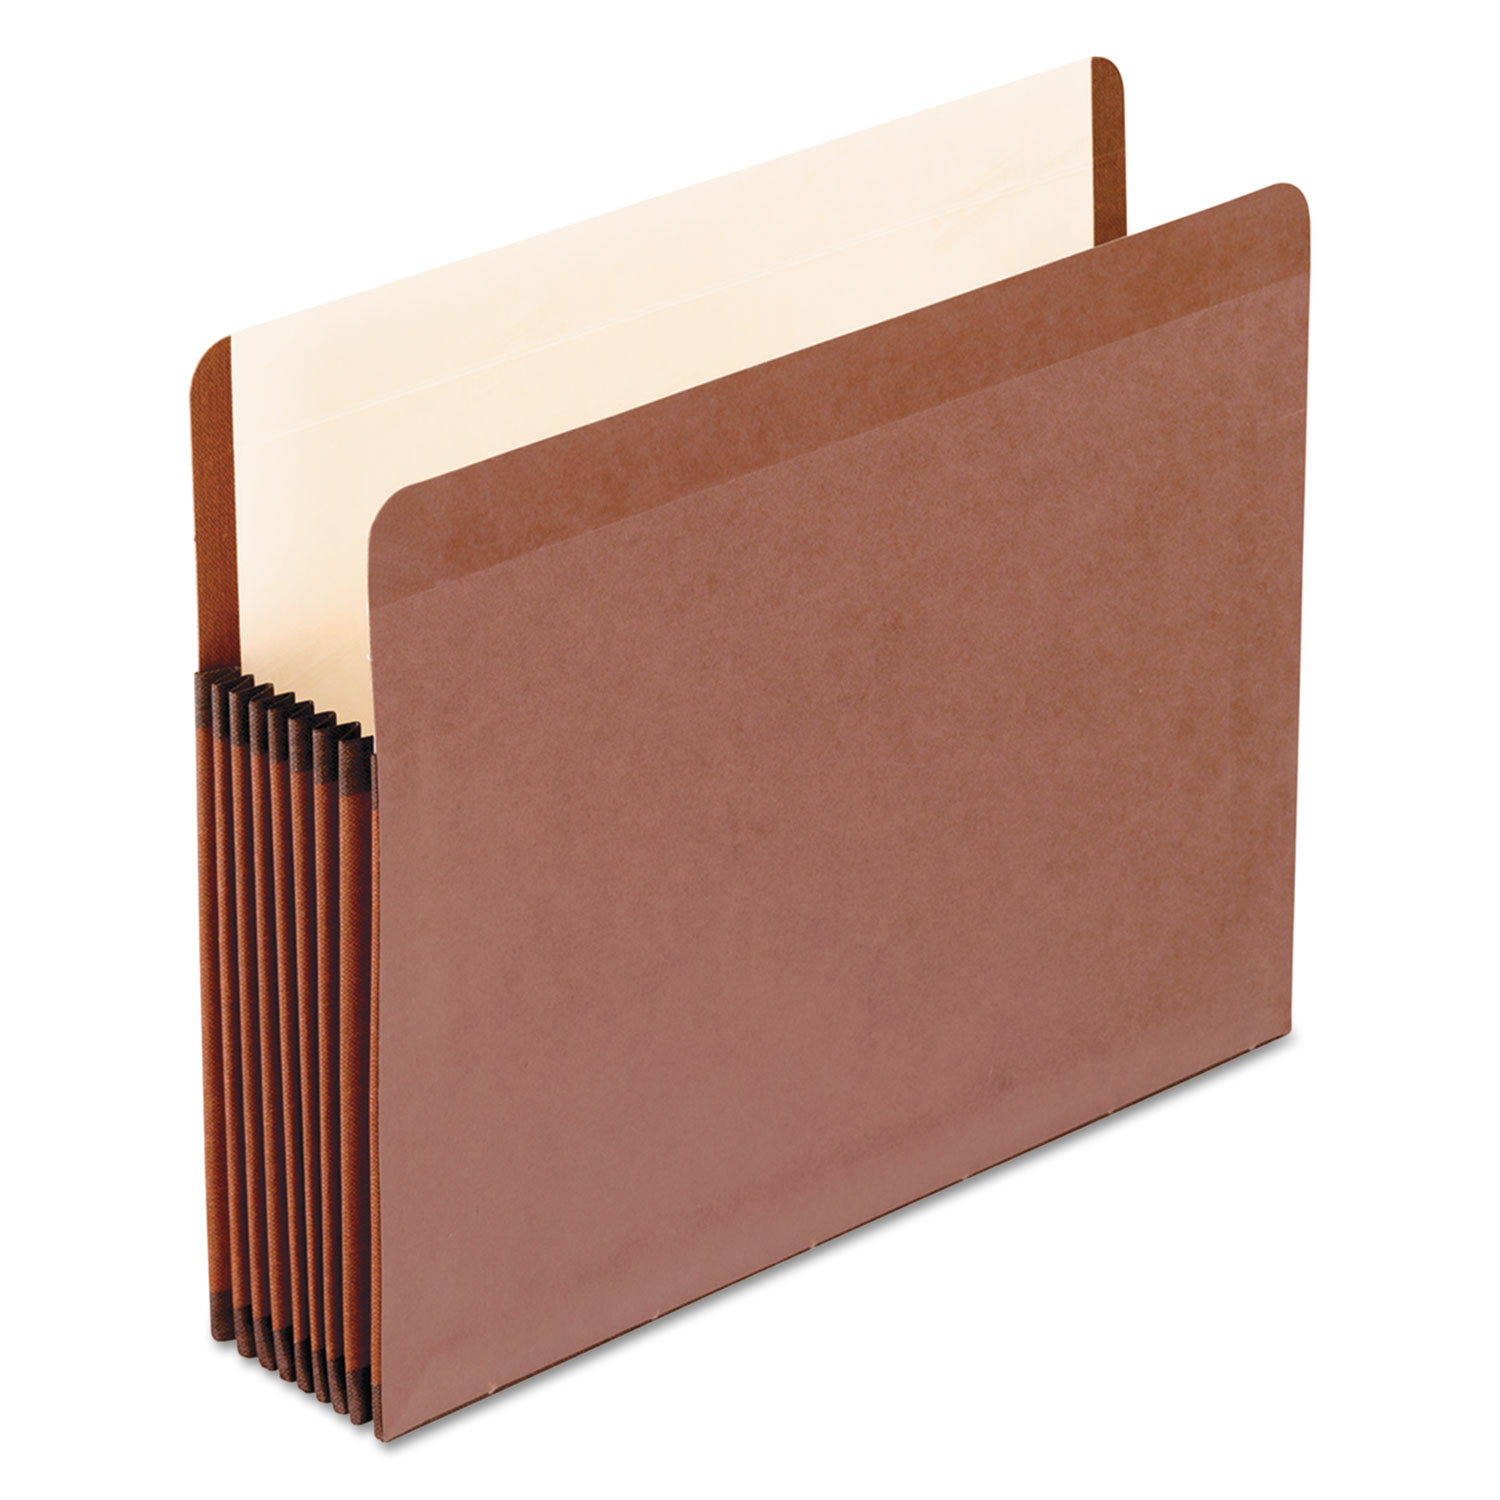 Premium Reinforced Expanding File Pockets, Straight Cut, 1 Pocket, Letter, Brown